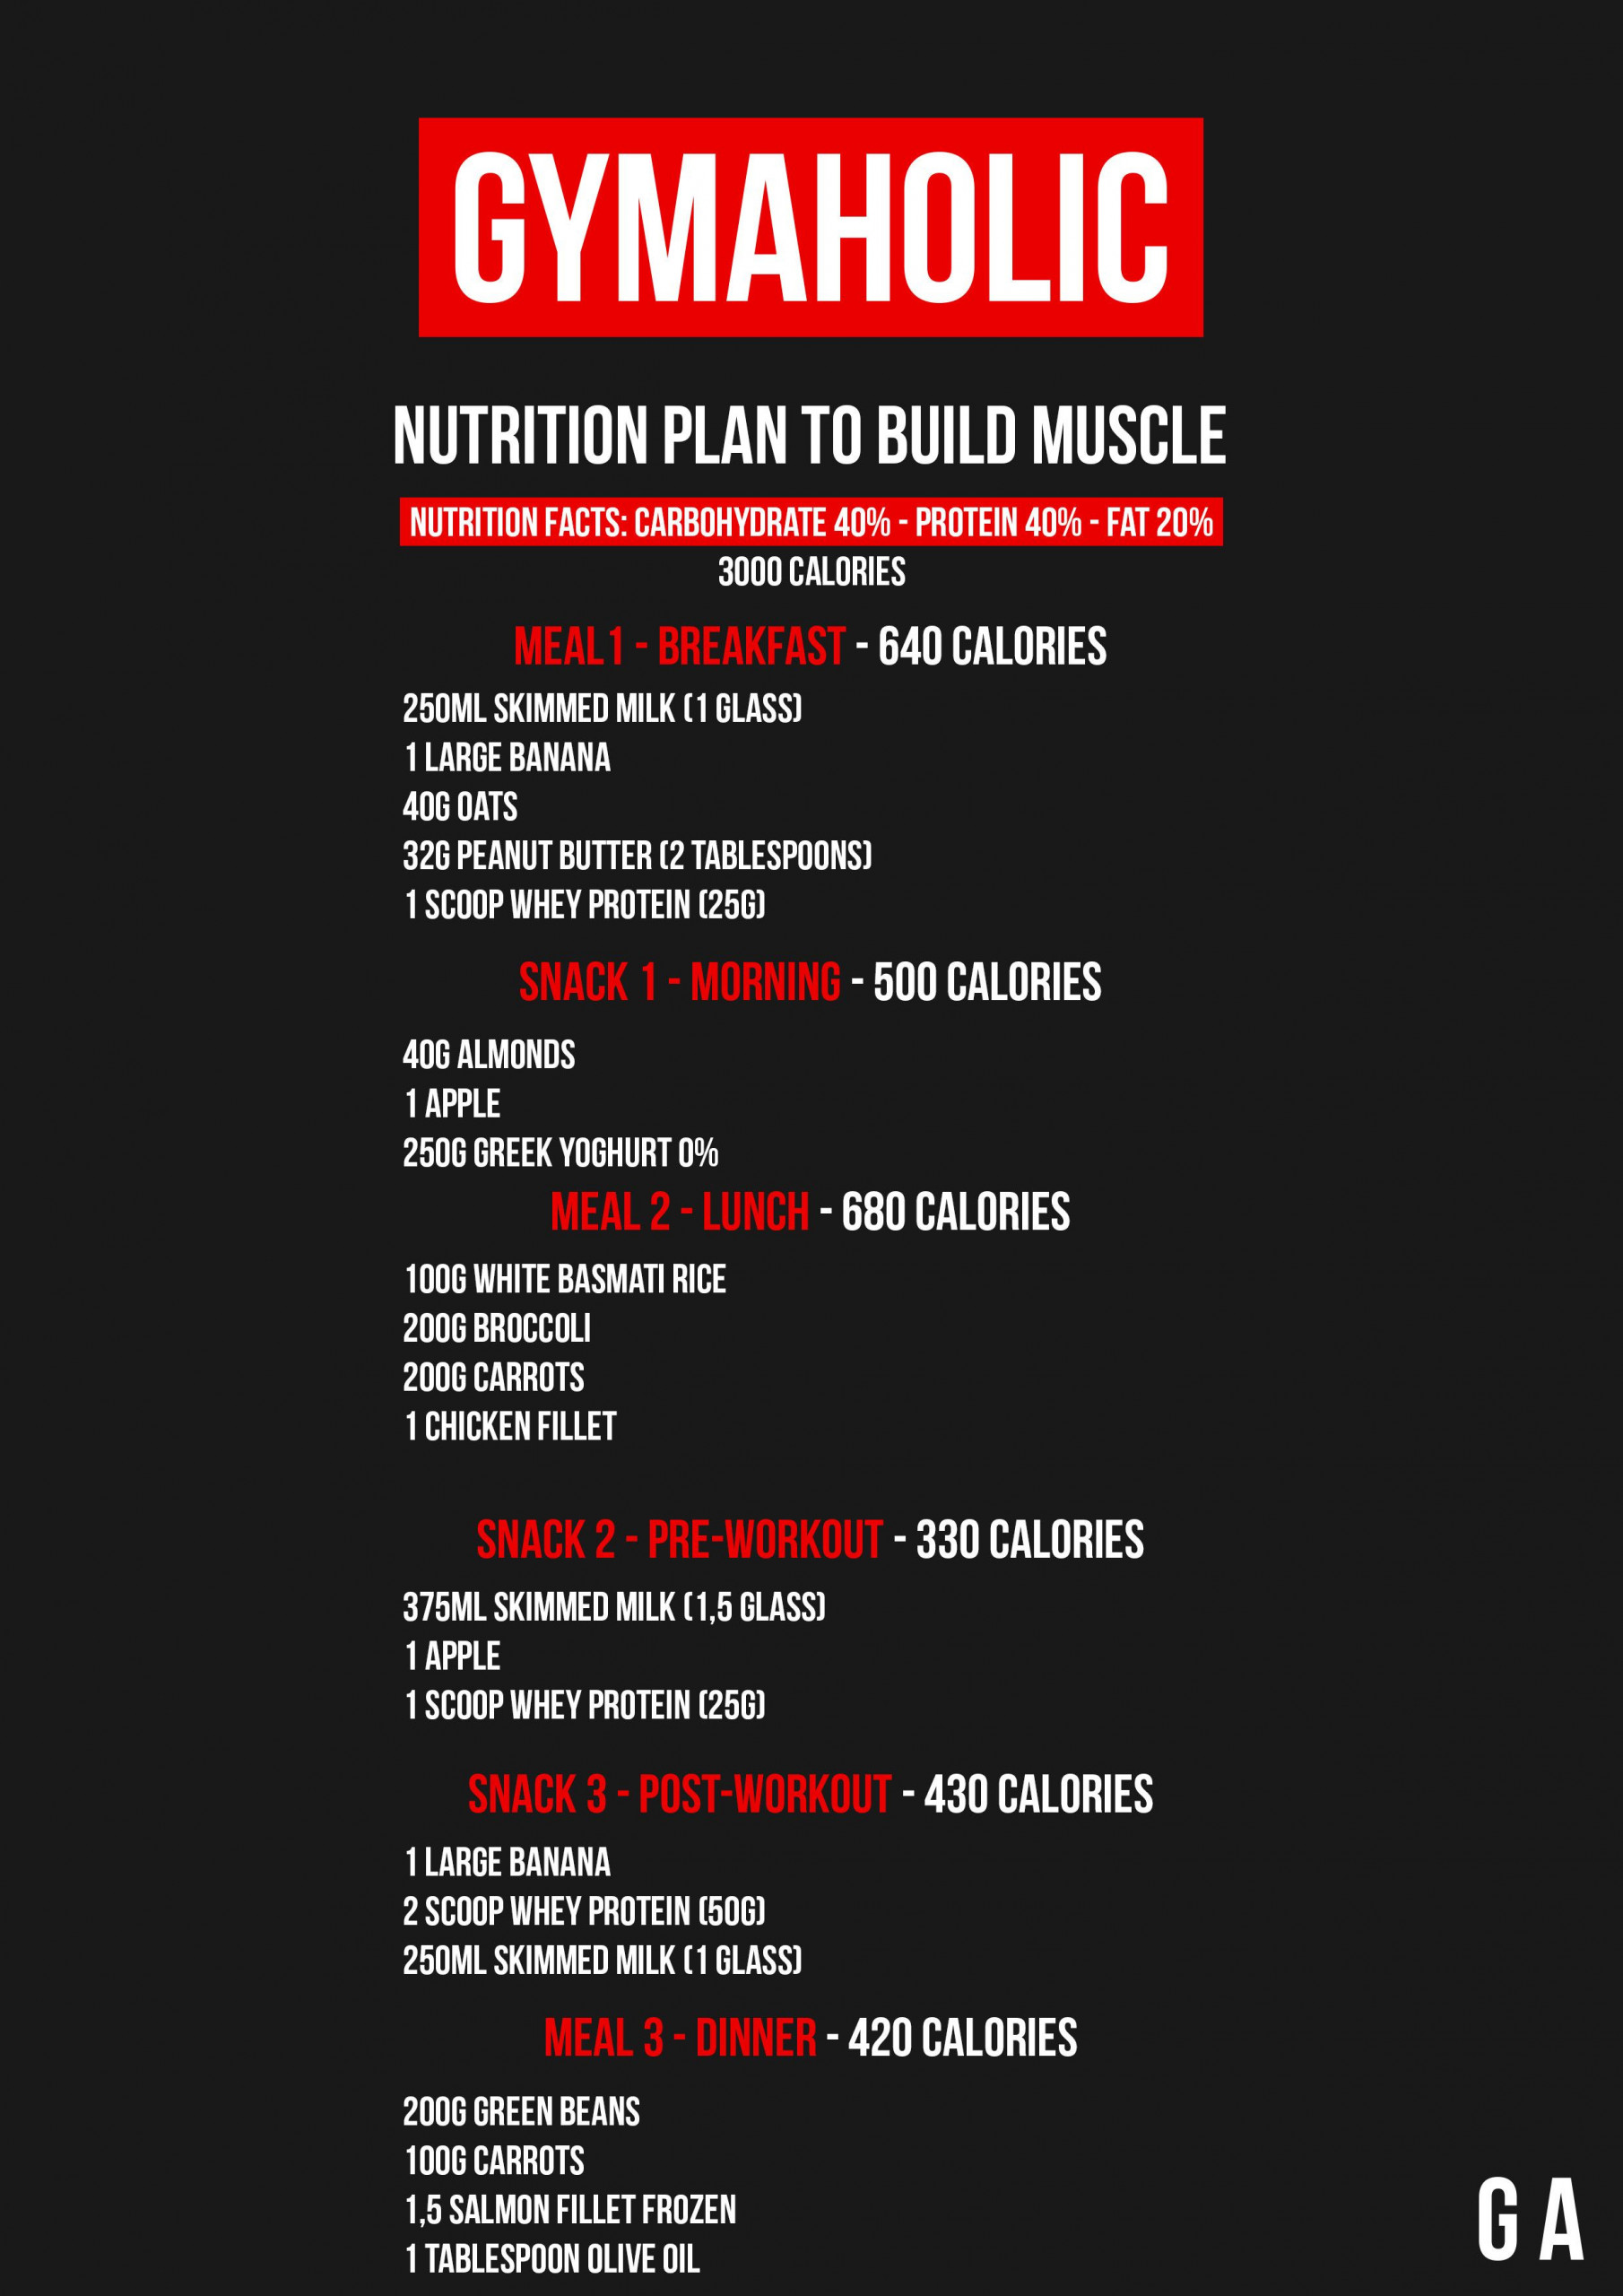 Diet Plan For Muscle Gain Quora Diet Plan